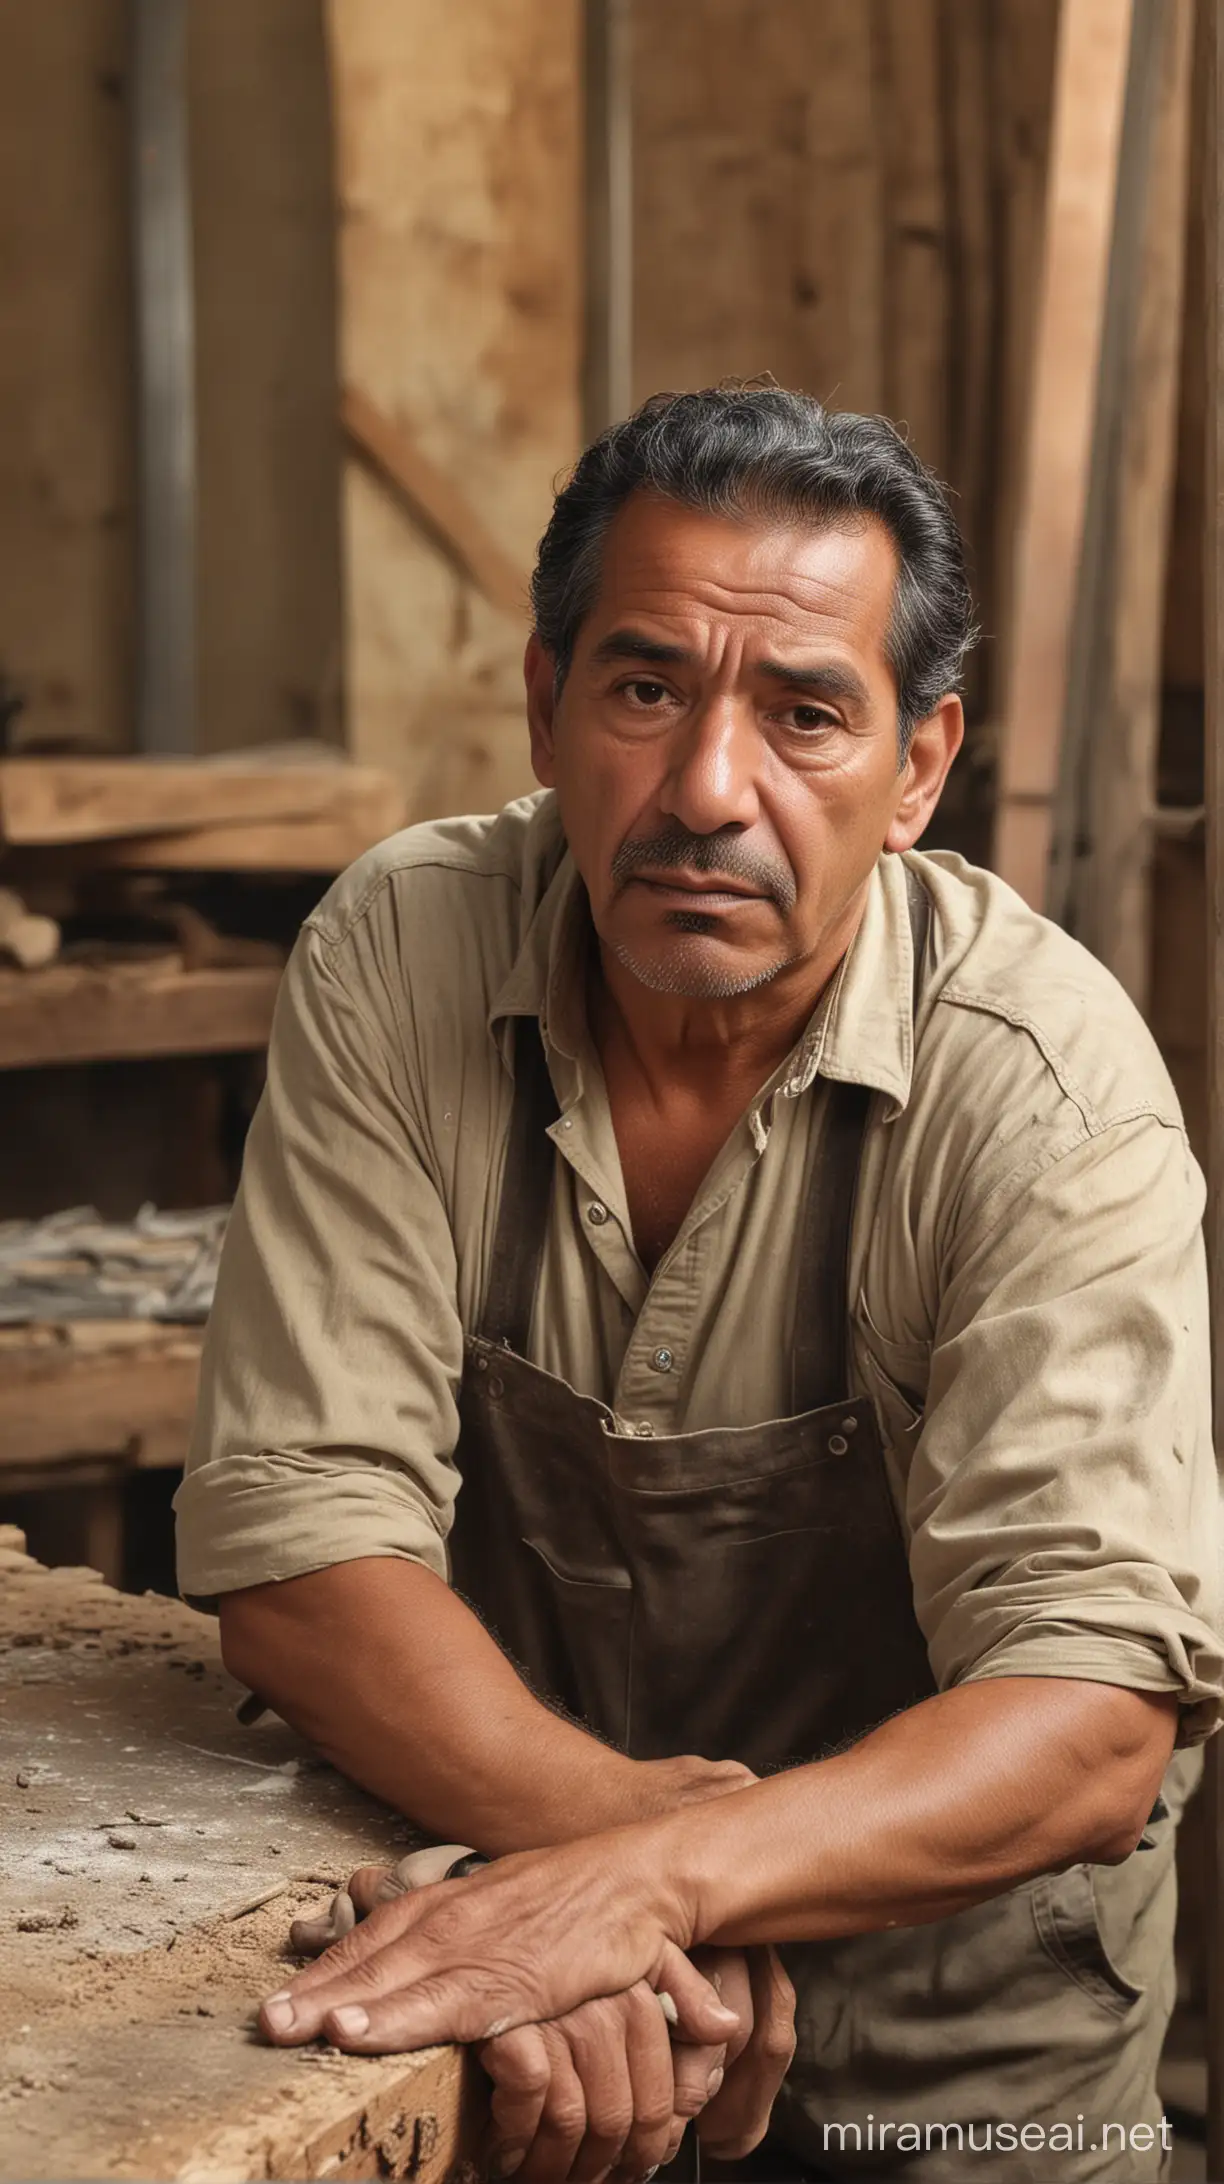 Mature Hispanic Craftsman Reflecting in Vintage Woodshop